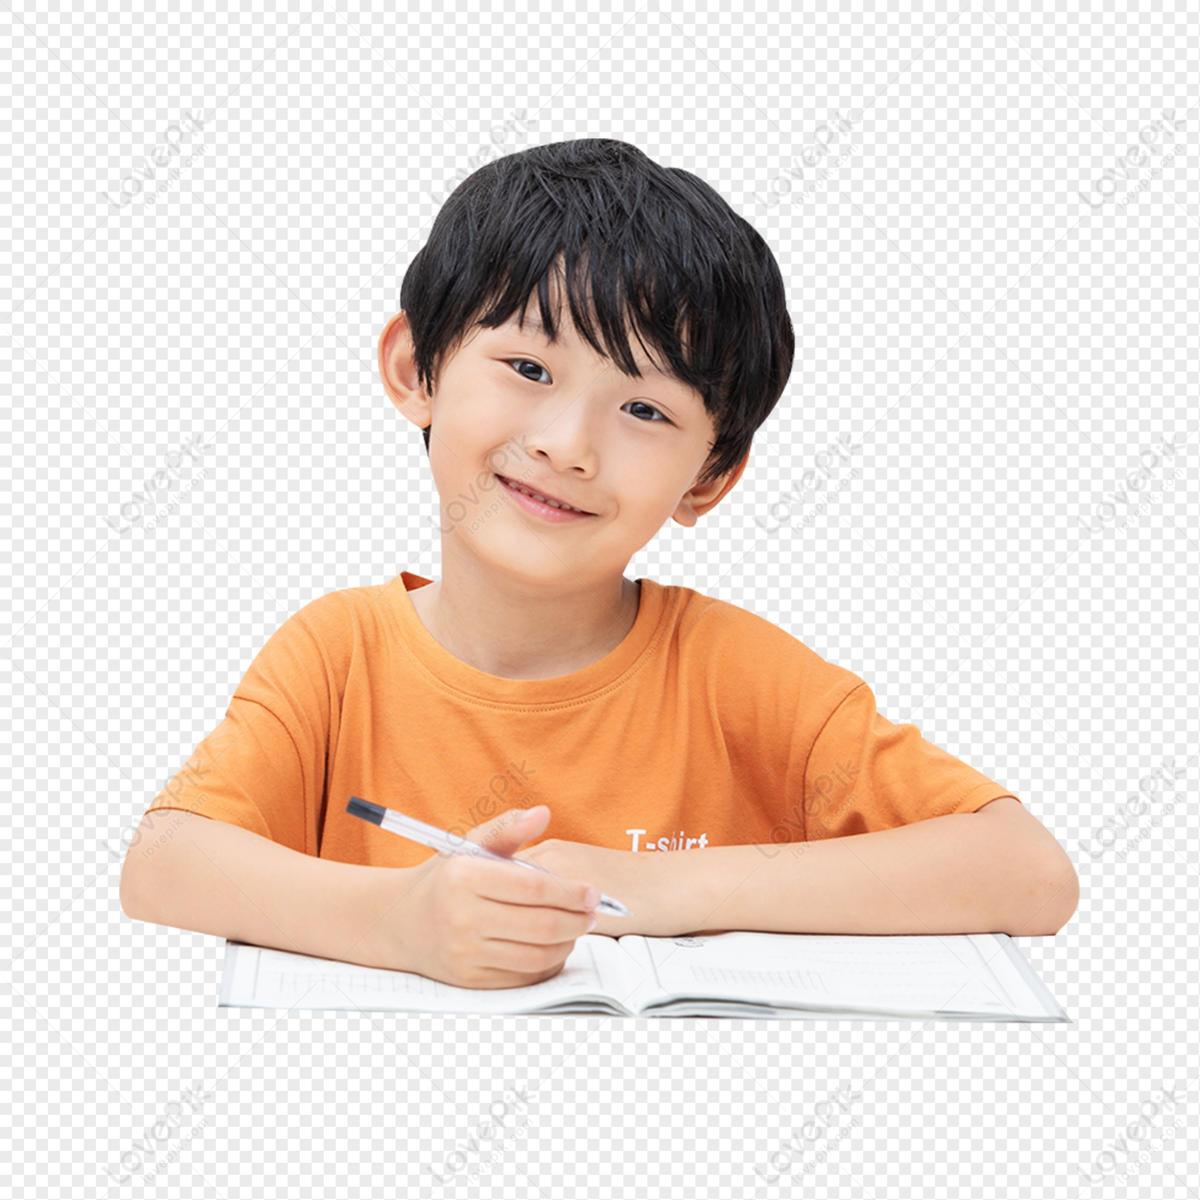 Children doing summer homework, summer homework, material, and homework png image